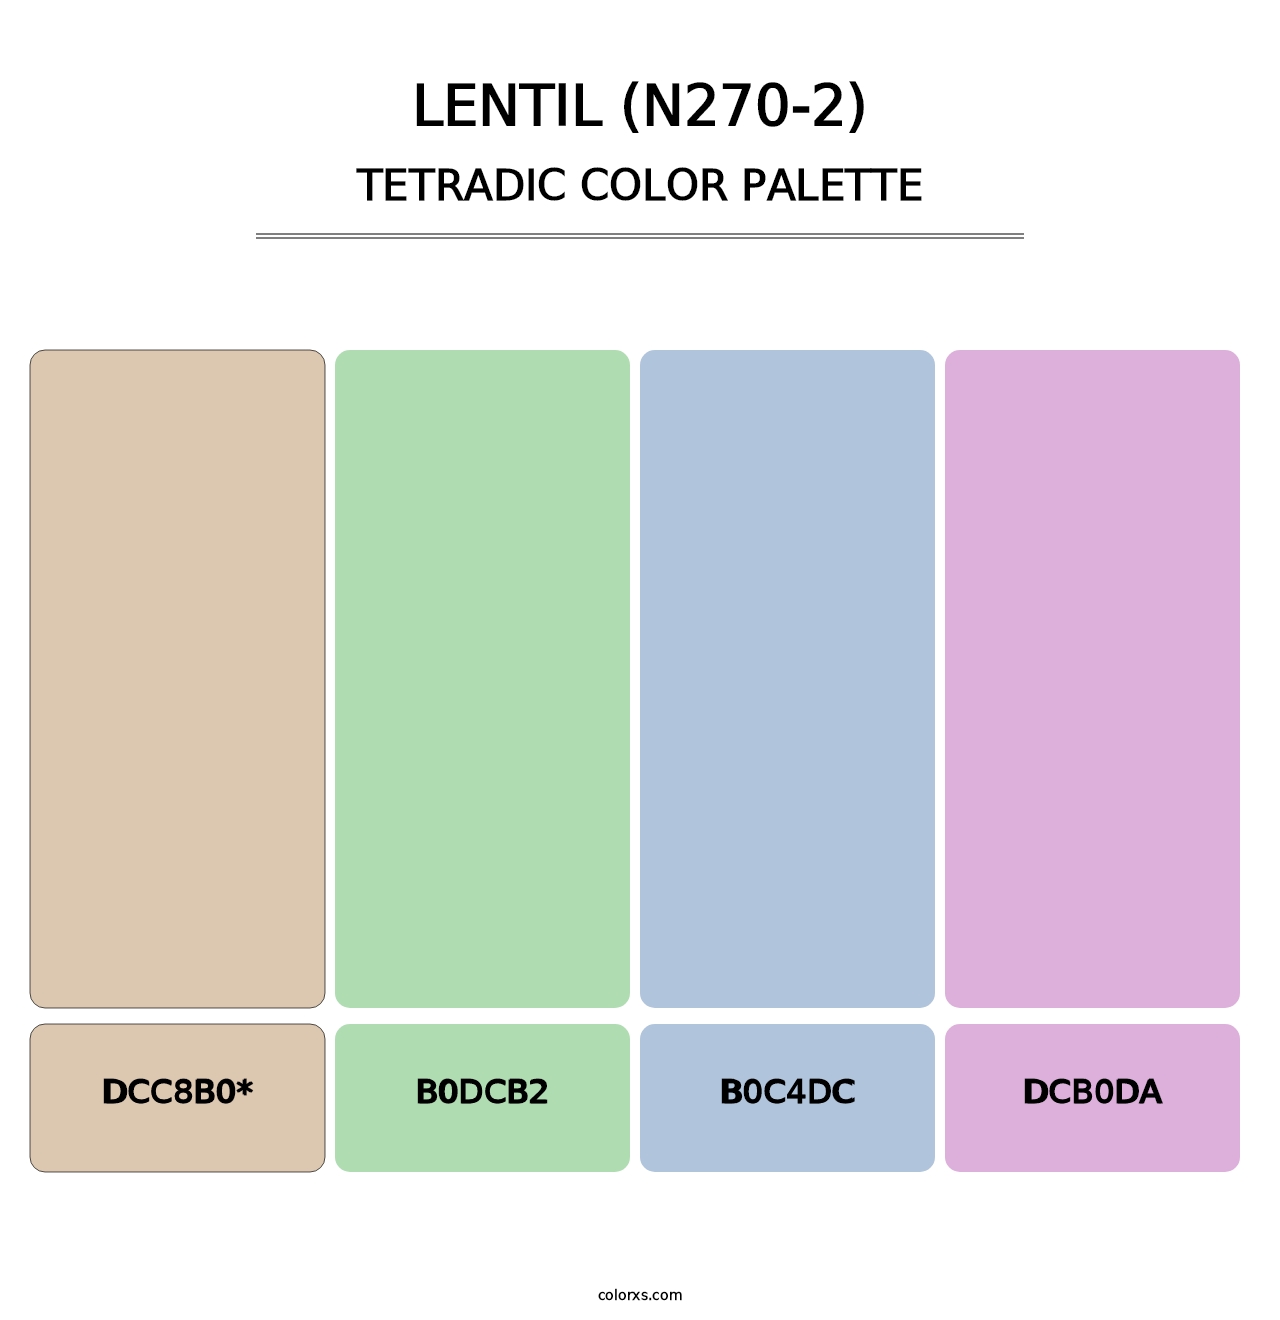 Lentil (N270-2) - Tetradic Color Palette